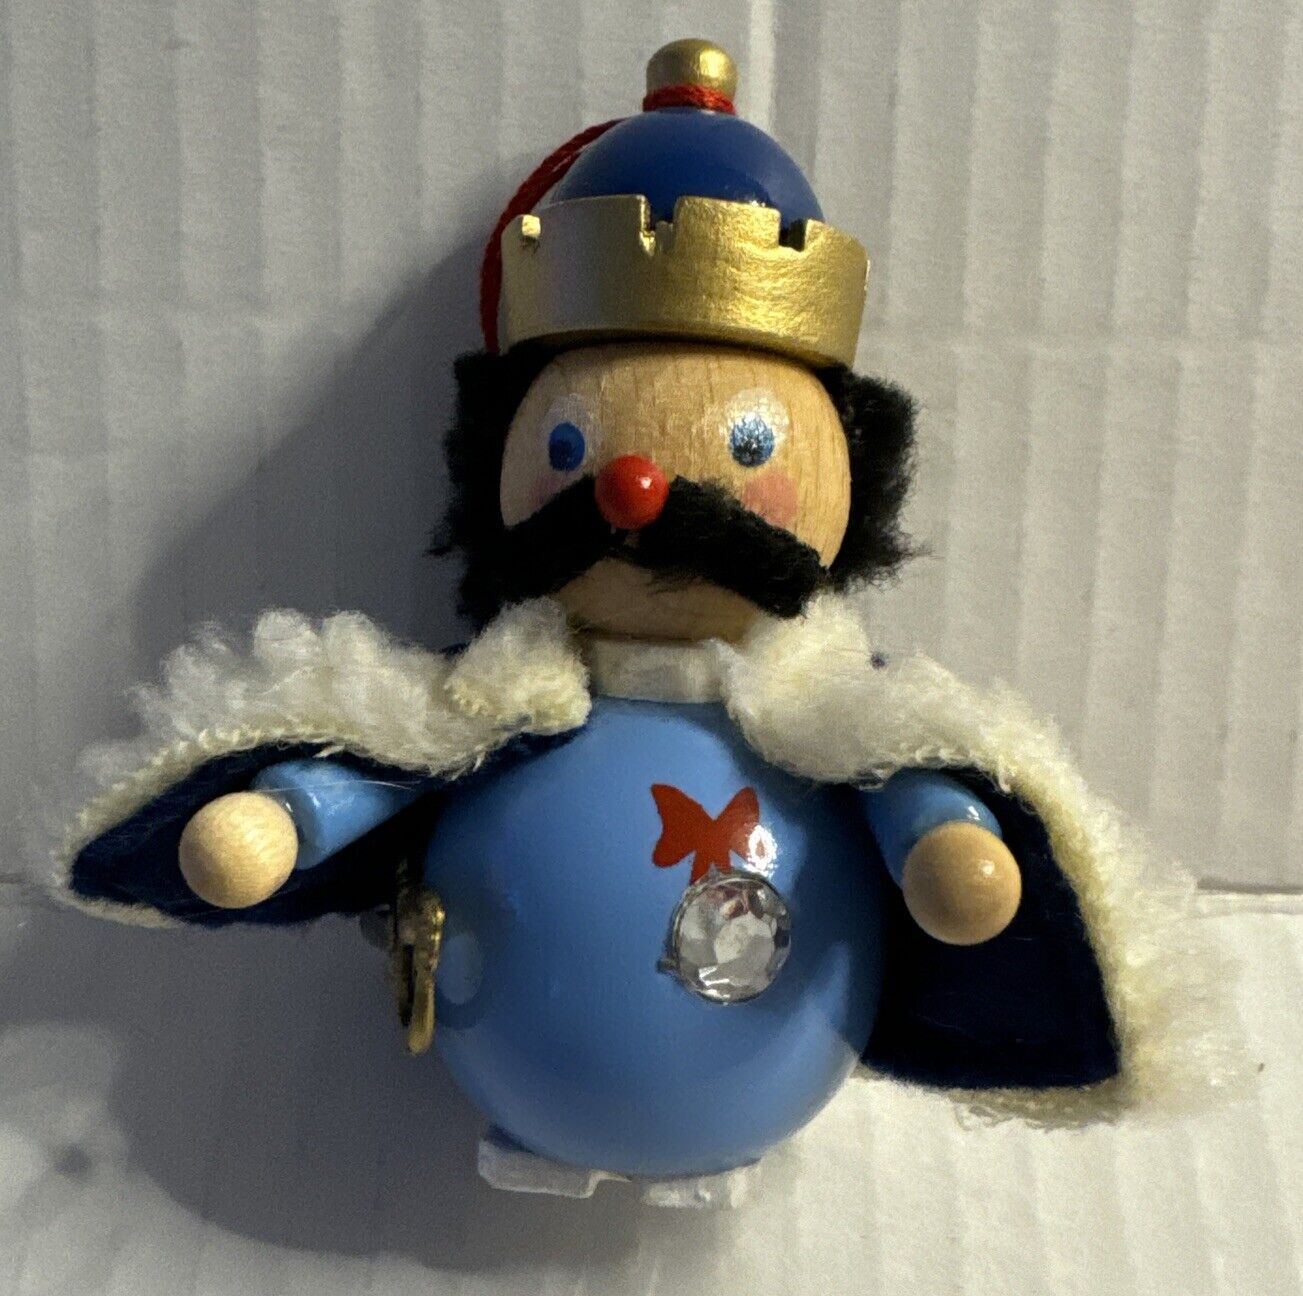 Vintage Steinbach King w/ Cape and Sword Christmas Ornament Handmade Germany 